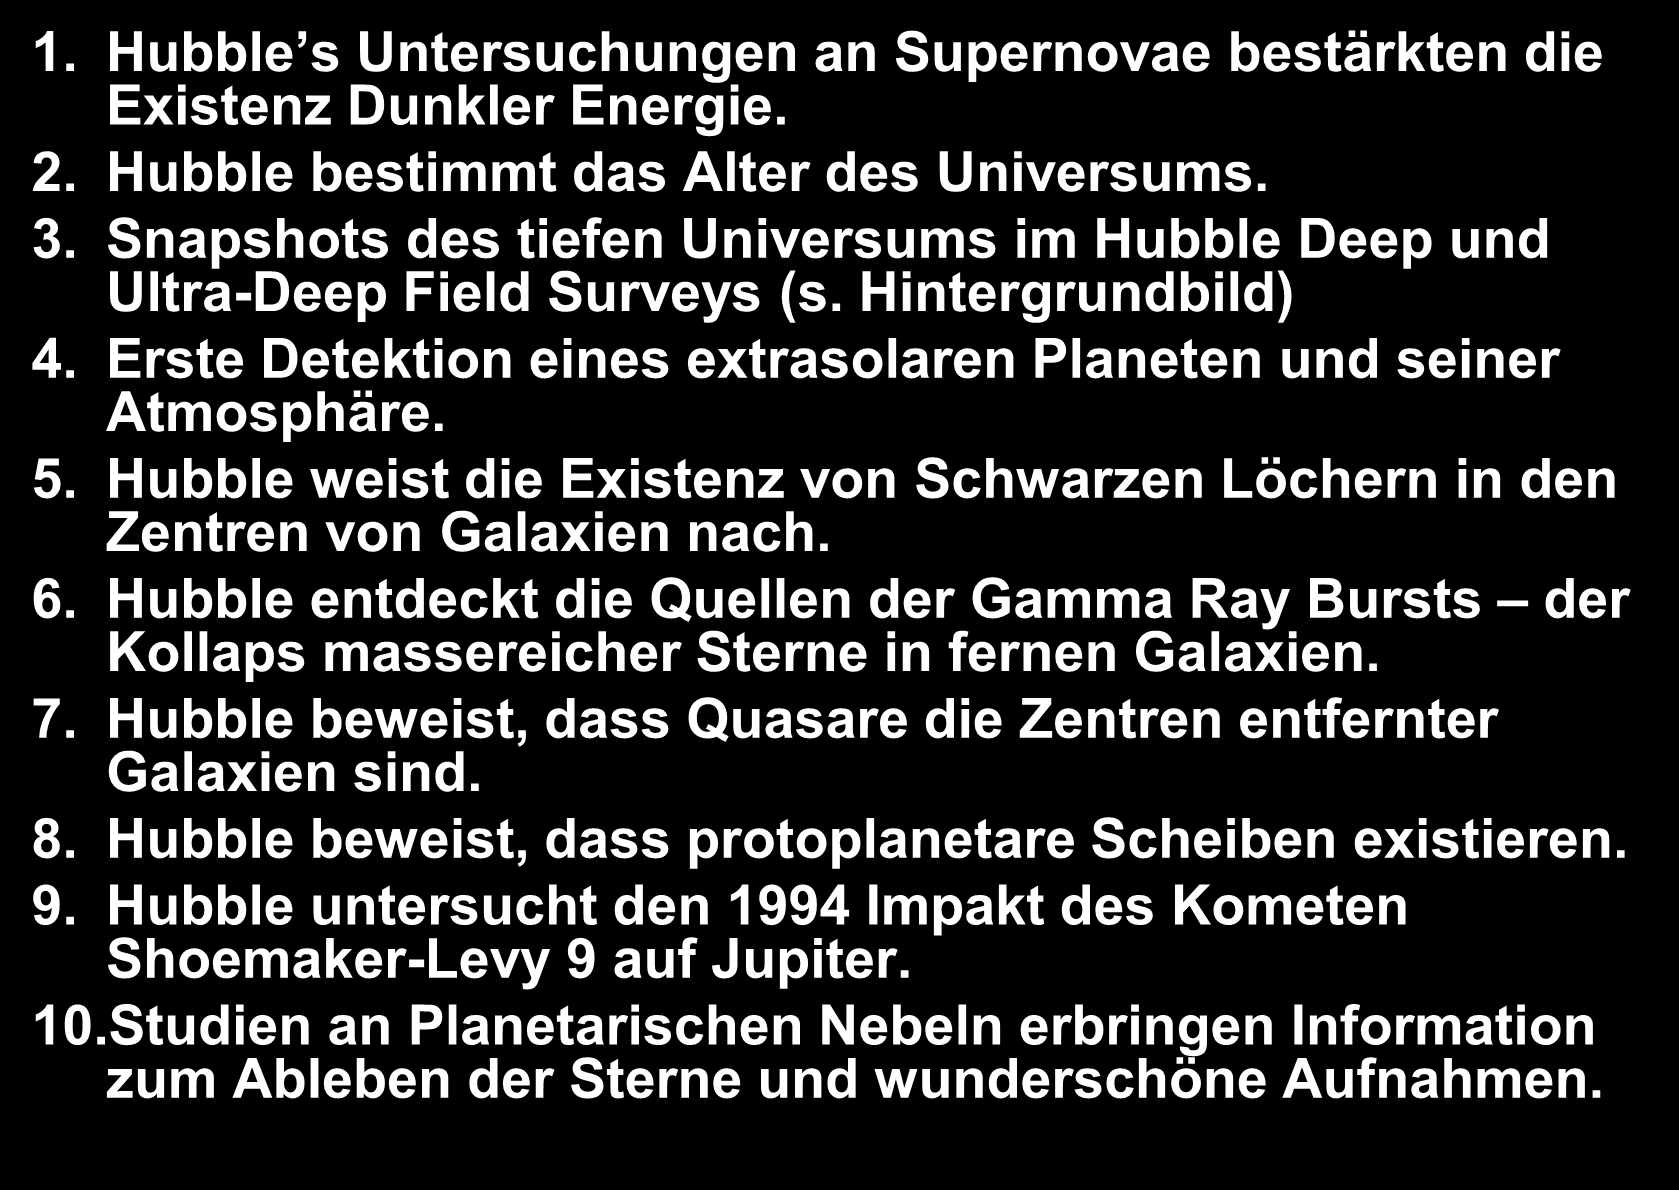 Hubble s Top 10 Wissenschaftliche Entdeckungen 1. Hubble s Untersuchungen an Supernovae bestärkten die Existenz Dunkler Energie. 2. Hubble bestimmt das Alter des Universums. 3.